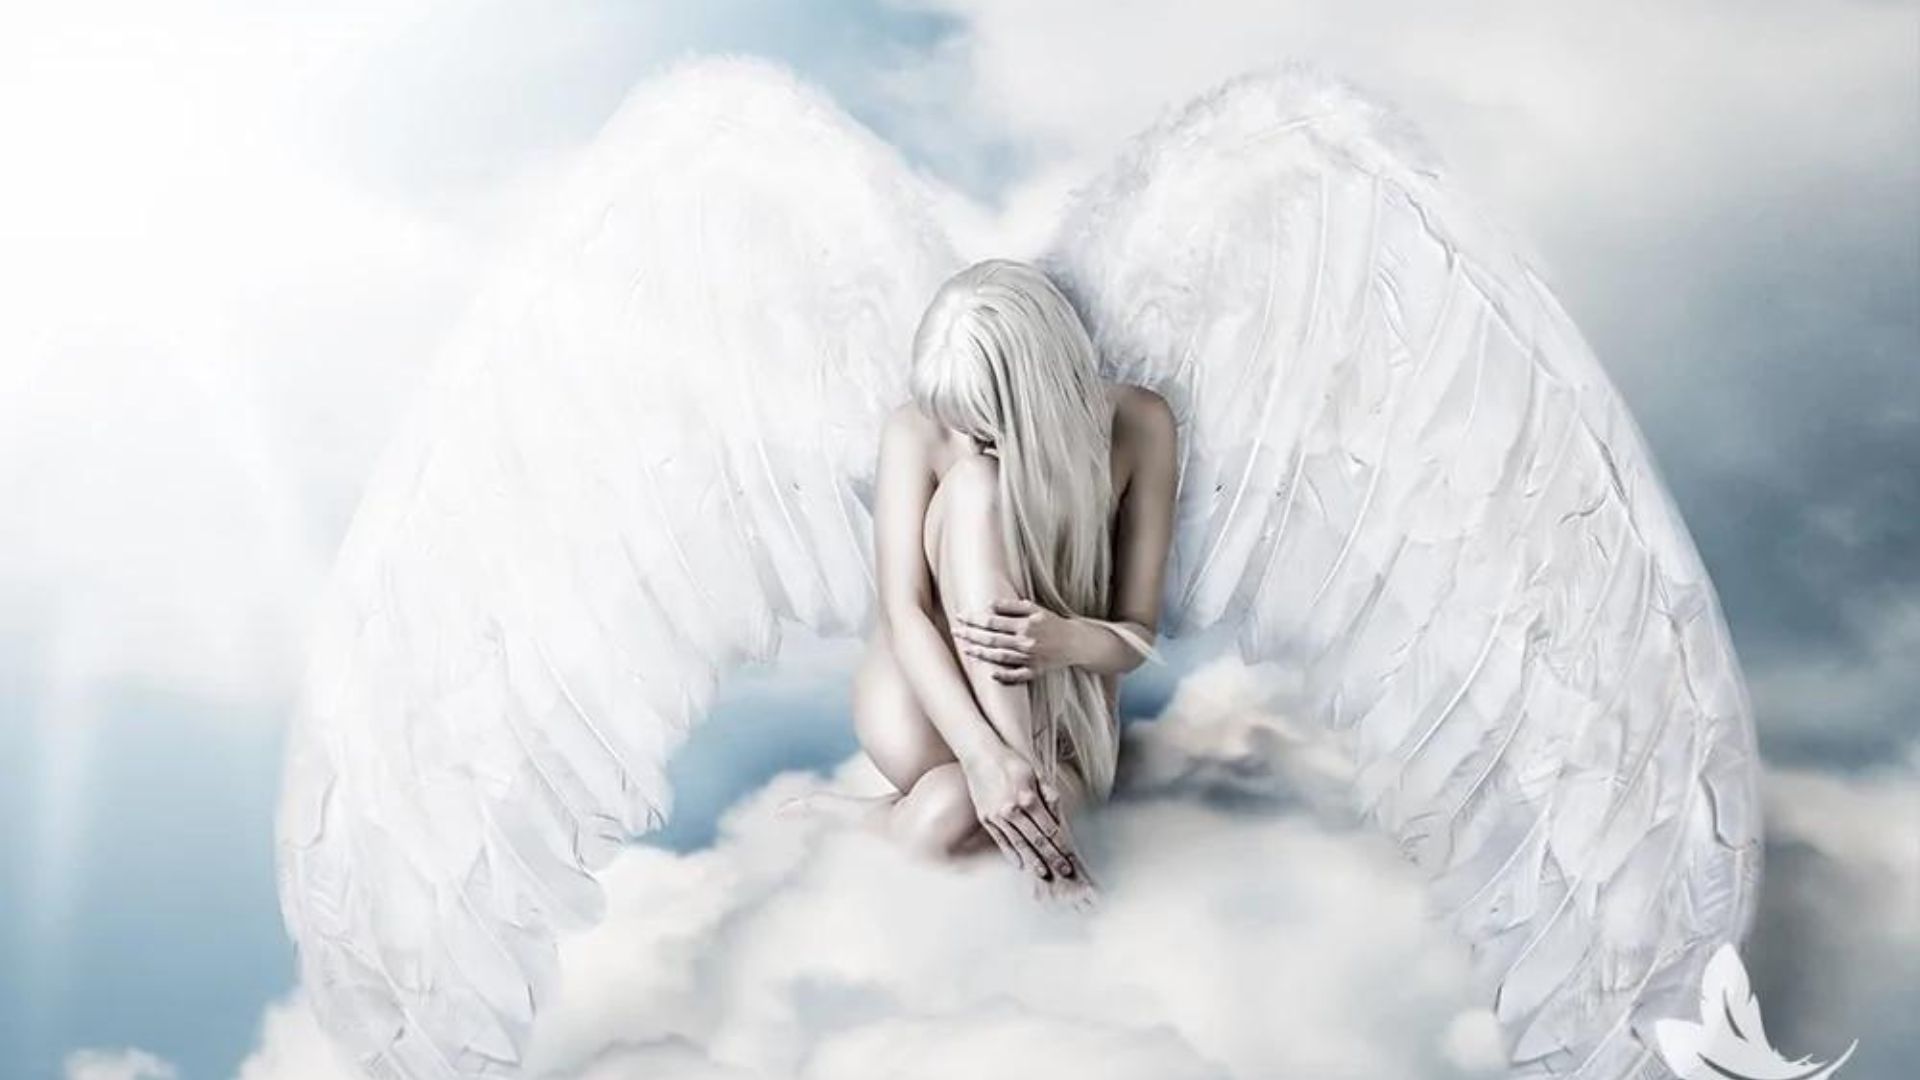 An Angel Sitting On A Cloud